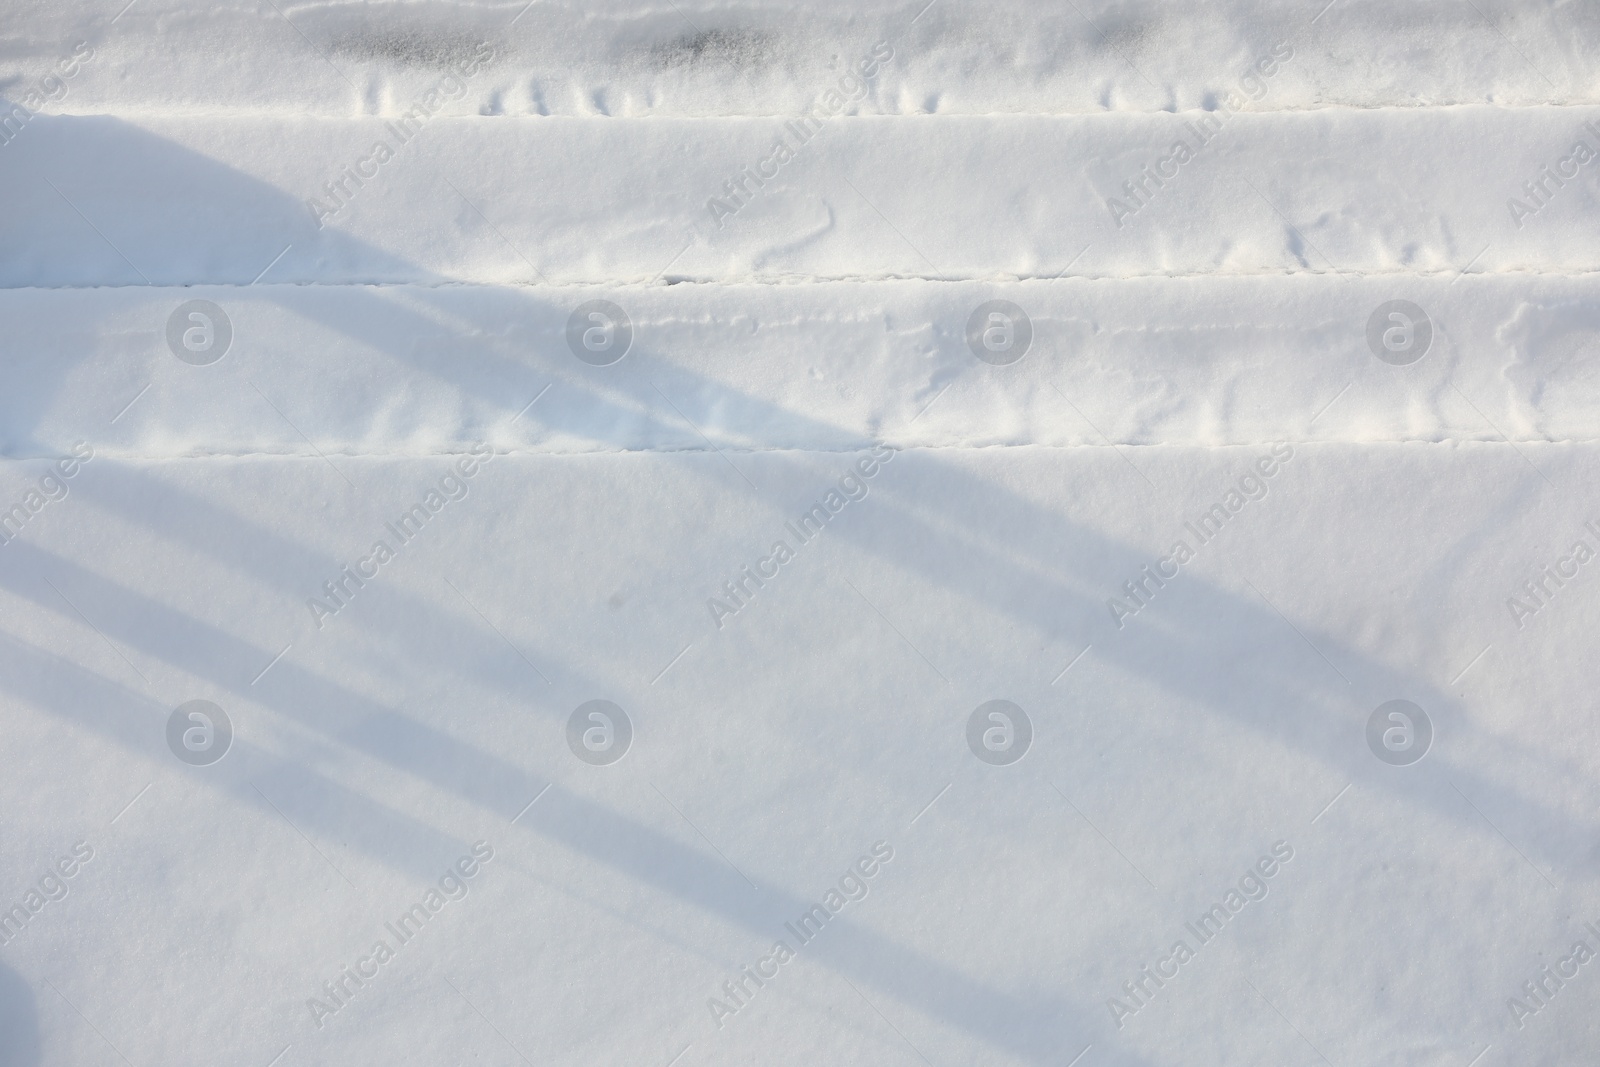 Photo of Car tire tracks on snow outdoors. Winter season